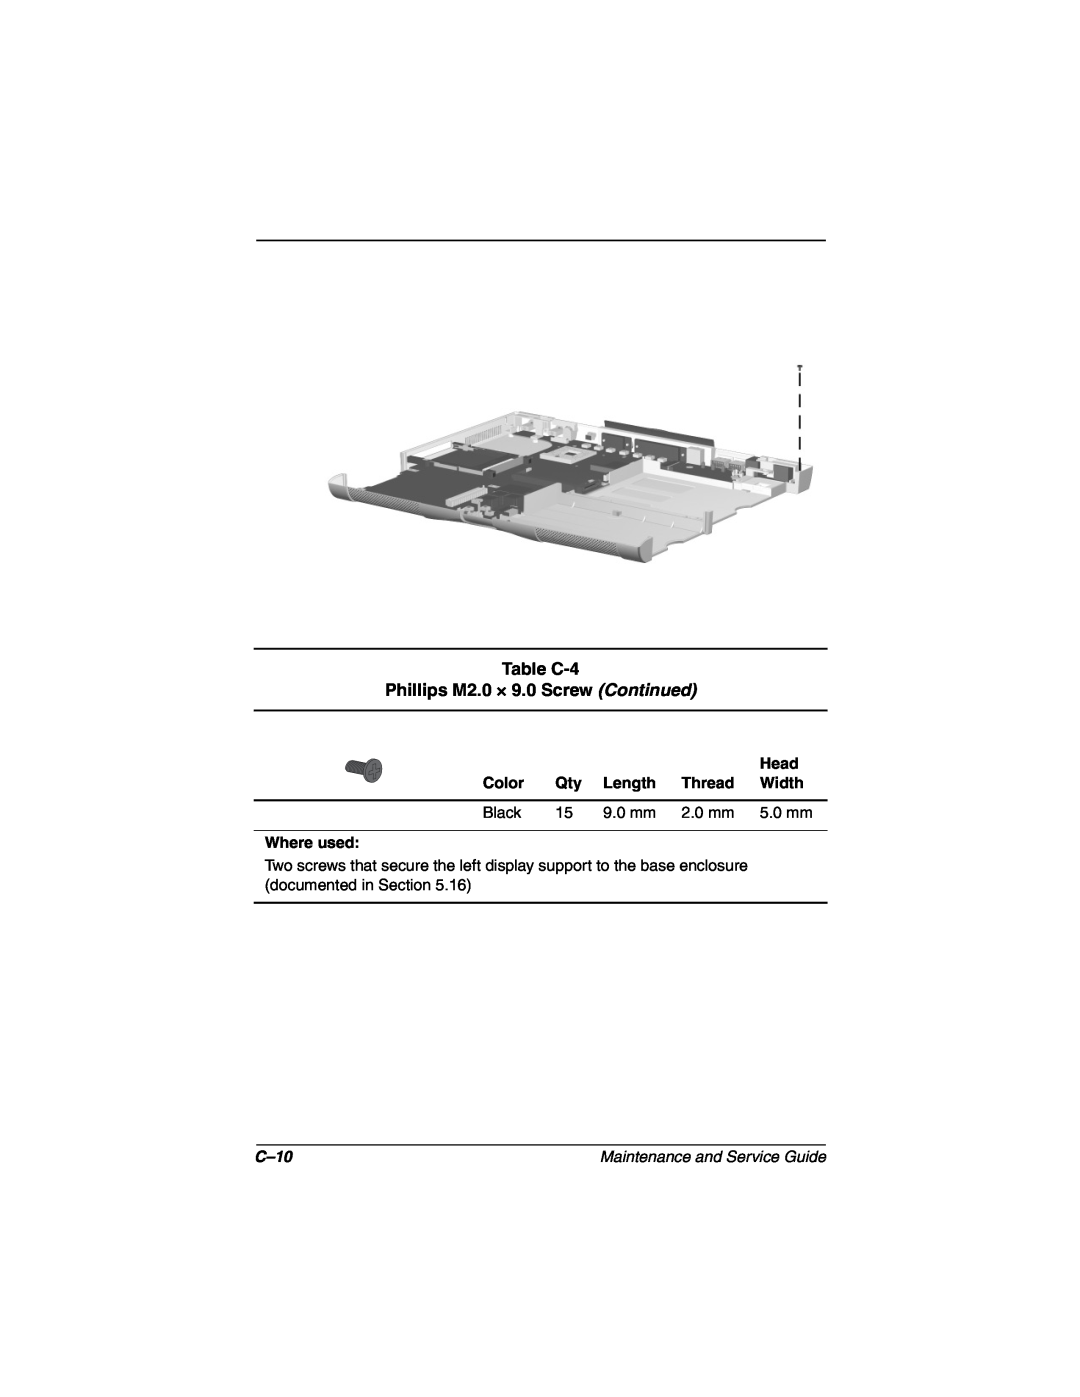 Compaq N160 manual Table C-4 Phillips M2.0 × 9.0 Screw Continued, C-10 